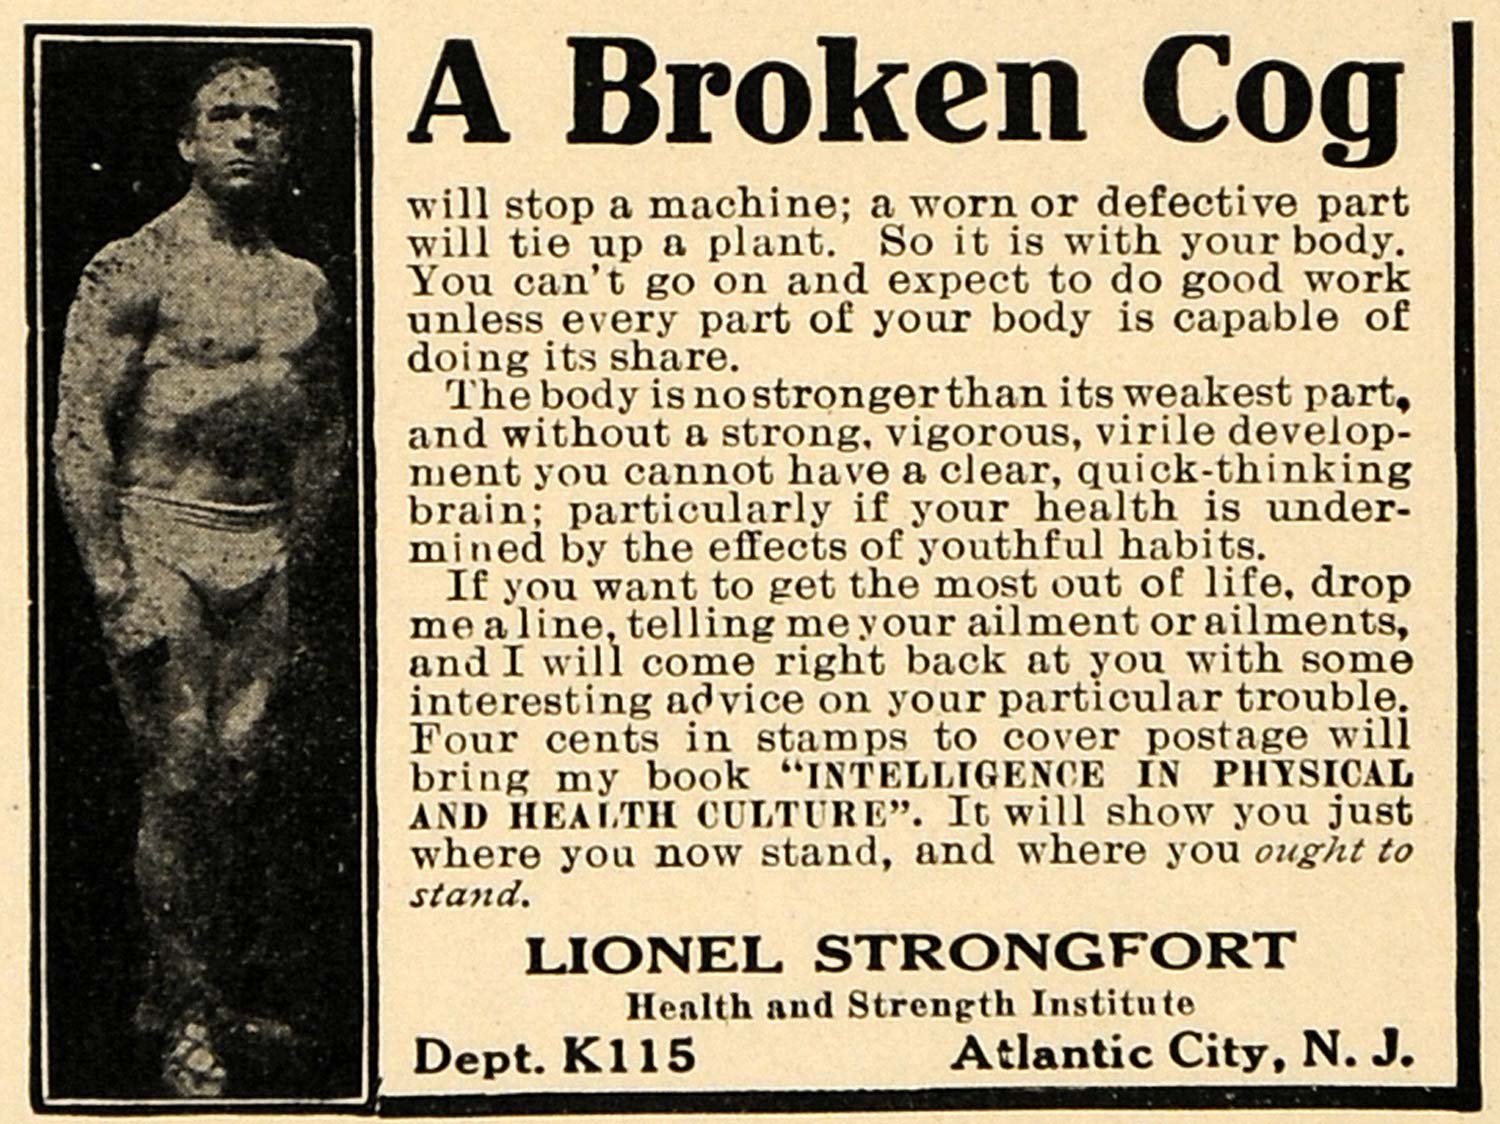 1915 Ad Lionel Strongfort Muscle Development Treatment - ORIGINAL ILW1